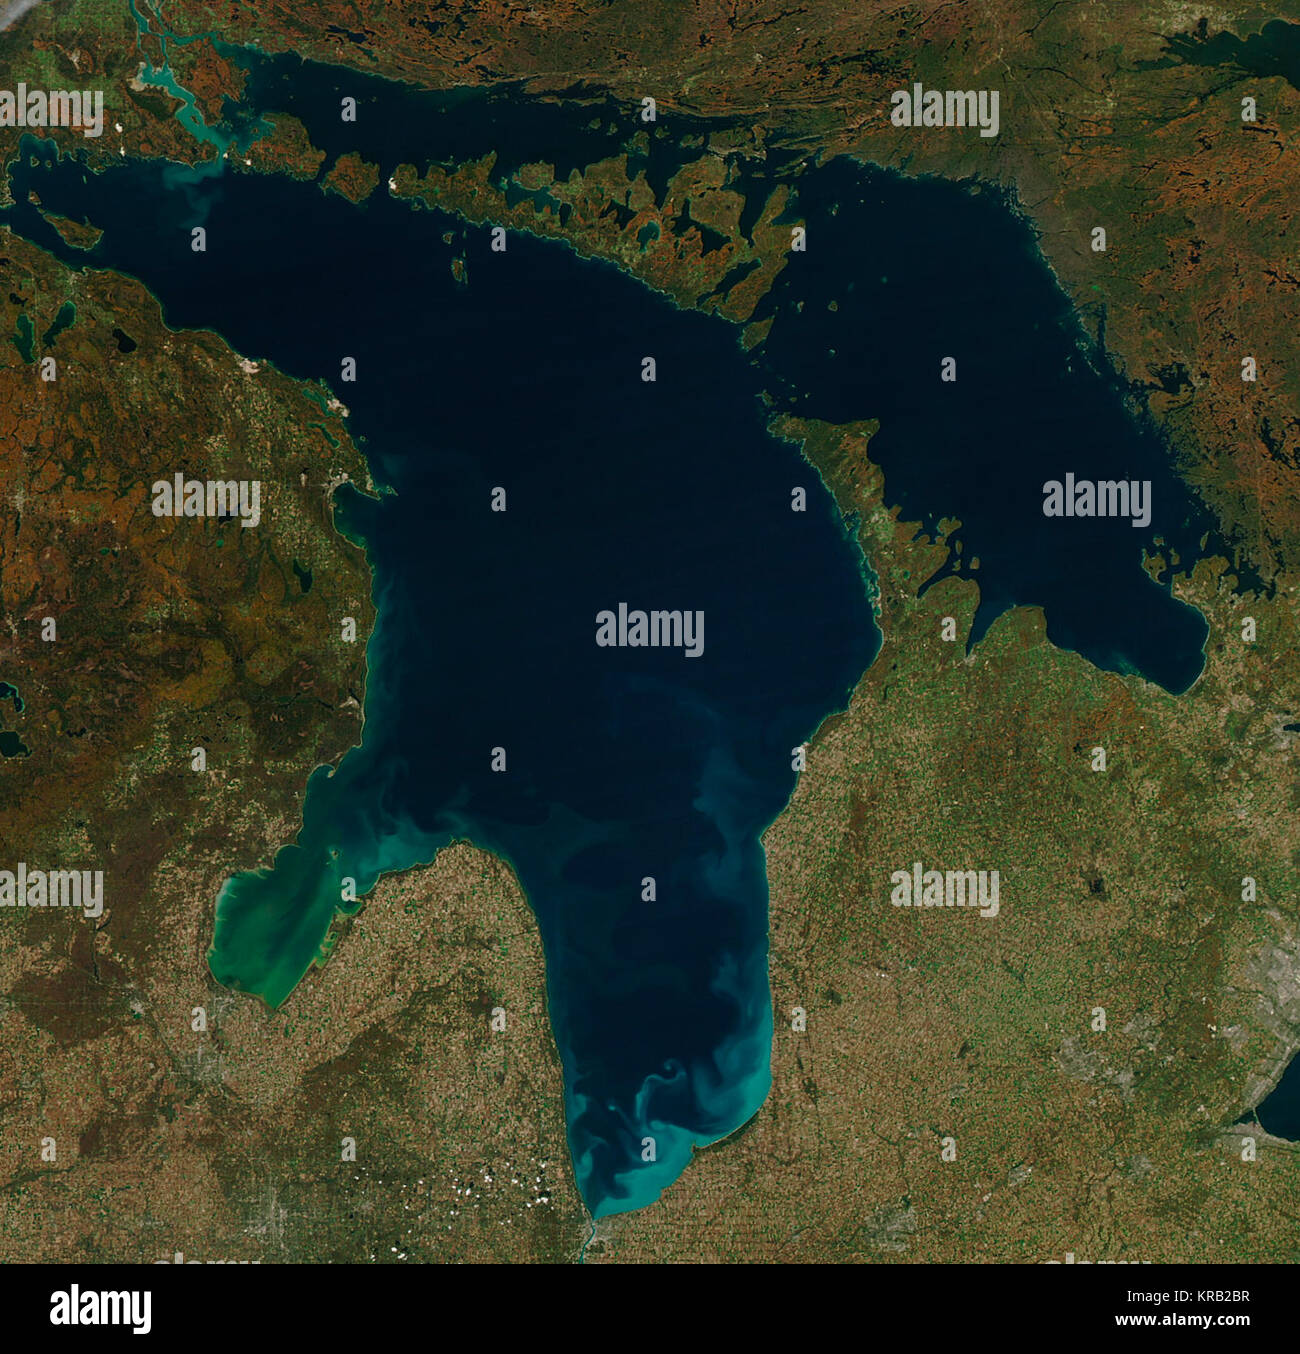 Глубина озера гурон. Озеро Гурон Северная Америка. Озеро Гурон вид сверху. Гурон Озёрная котловина. Тип озера Гурон.